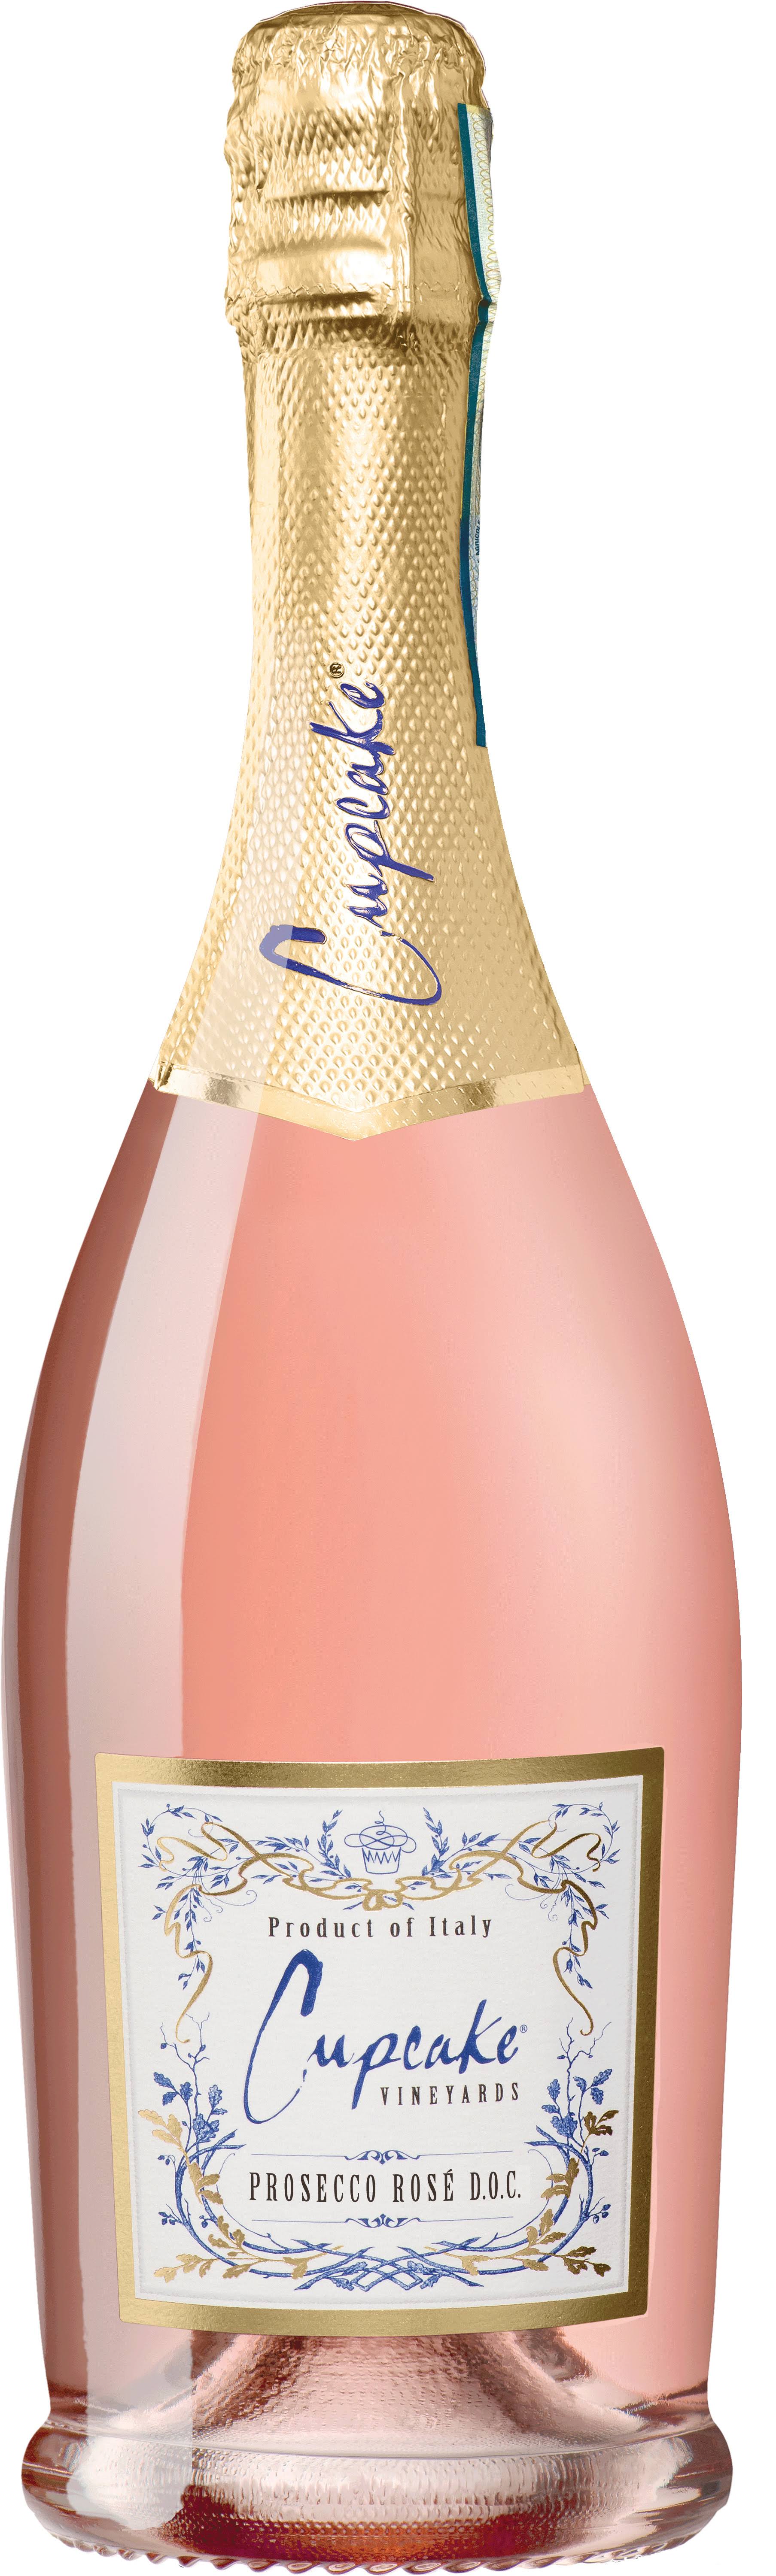 Cupcake Vineyards Sparkling Wine, Prosecco Rose DOC, 2019 - 750 ml